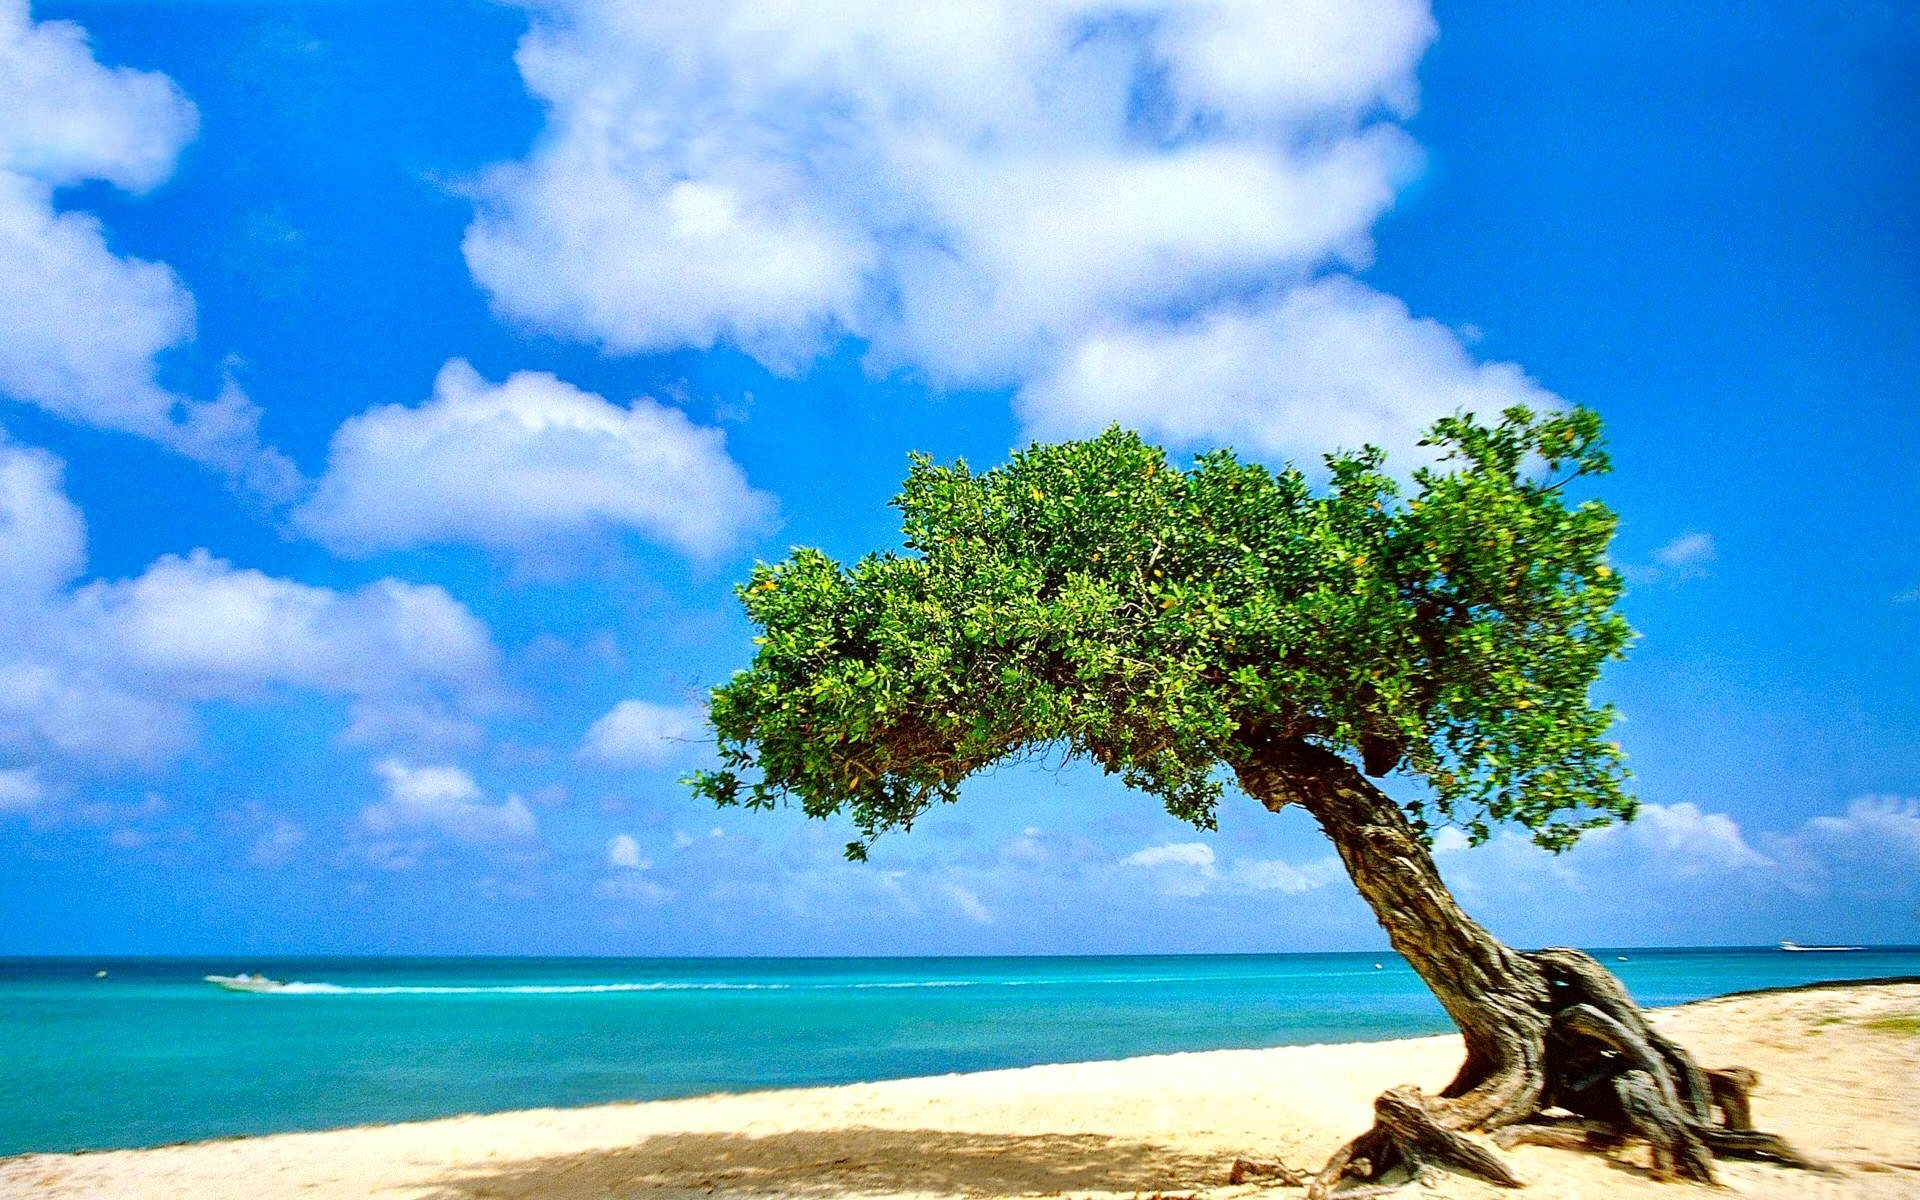 Aruba Wallpaper Beach Image Nature Tree World